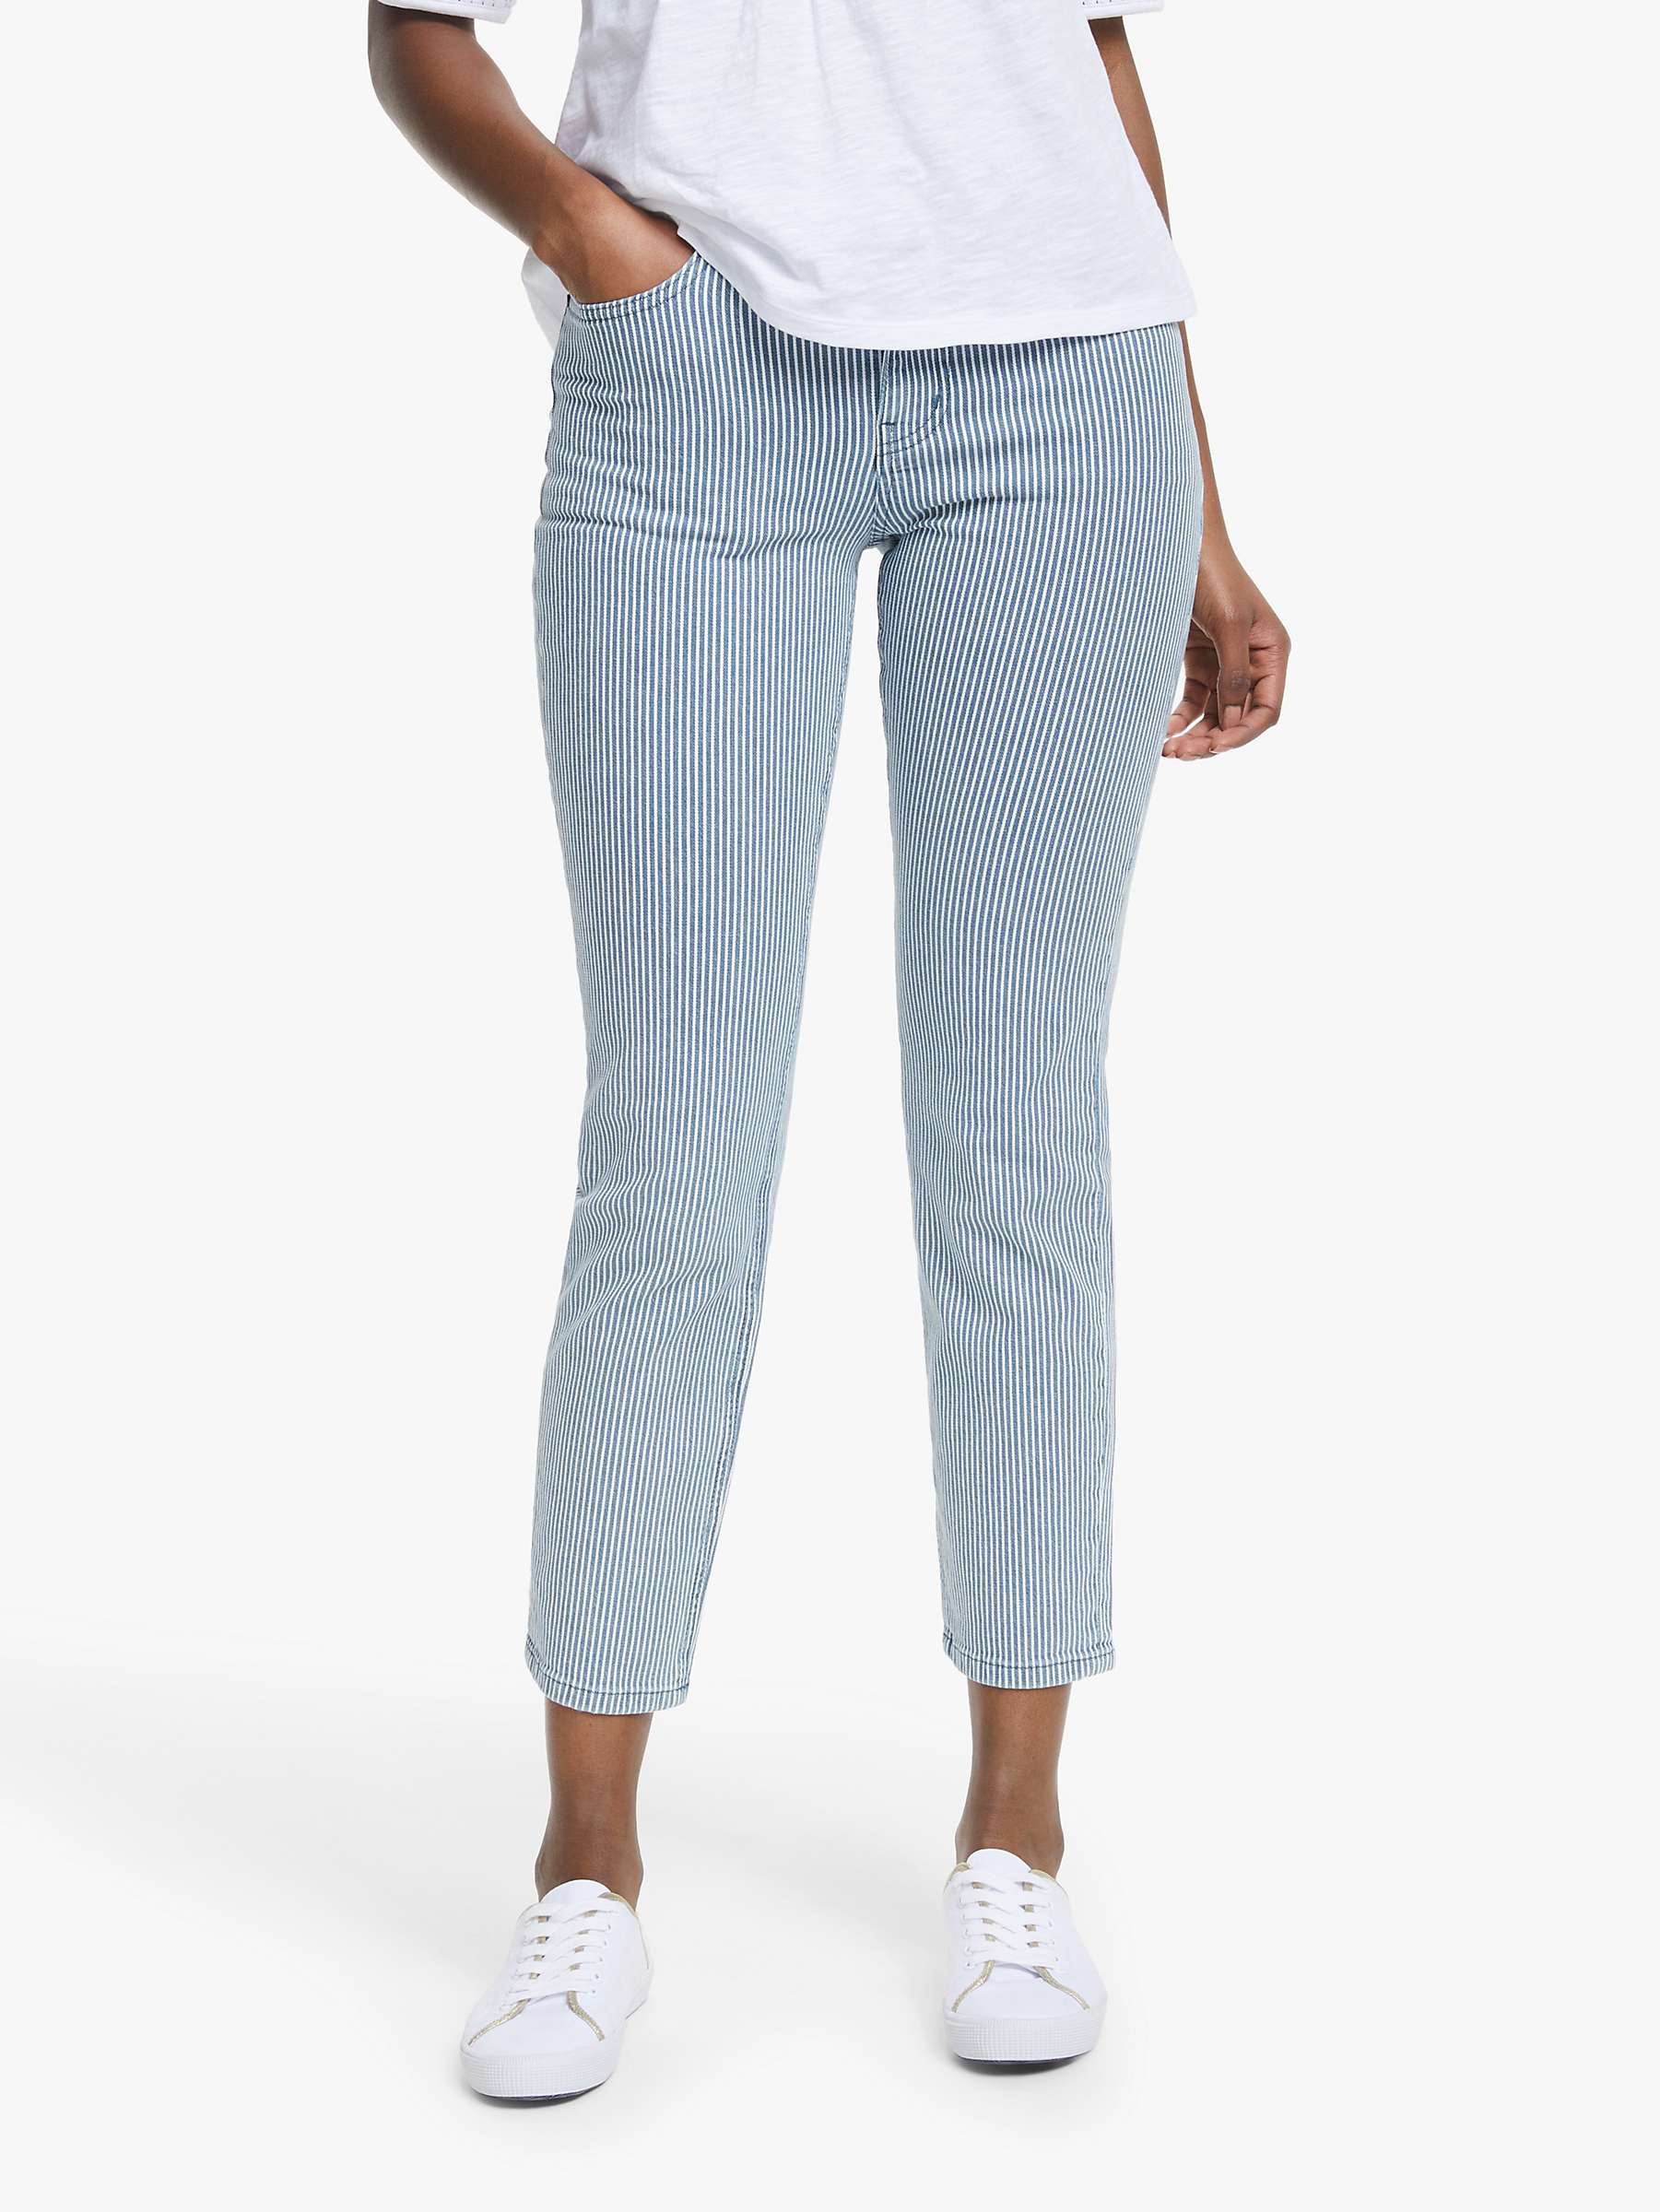 Buy Boden Slim Skimmer Ticking Stripe Crop Jeans, Blue Online at johnlewis.com